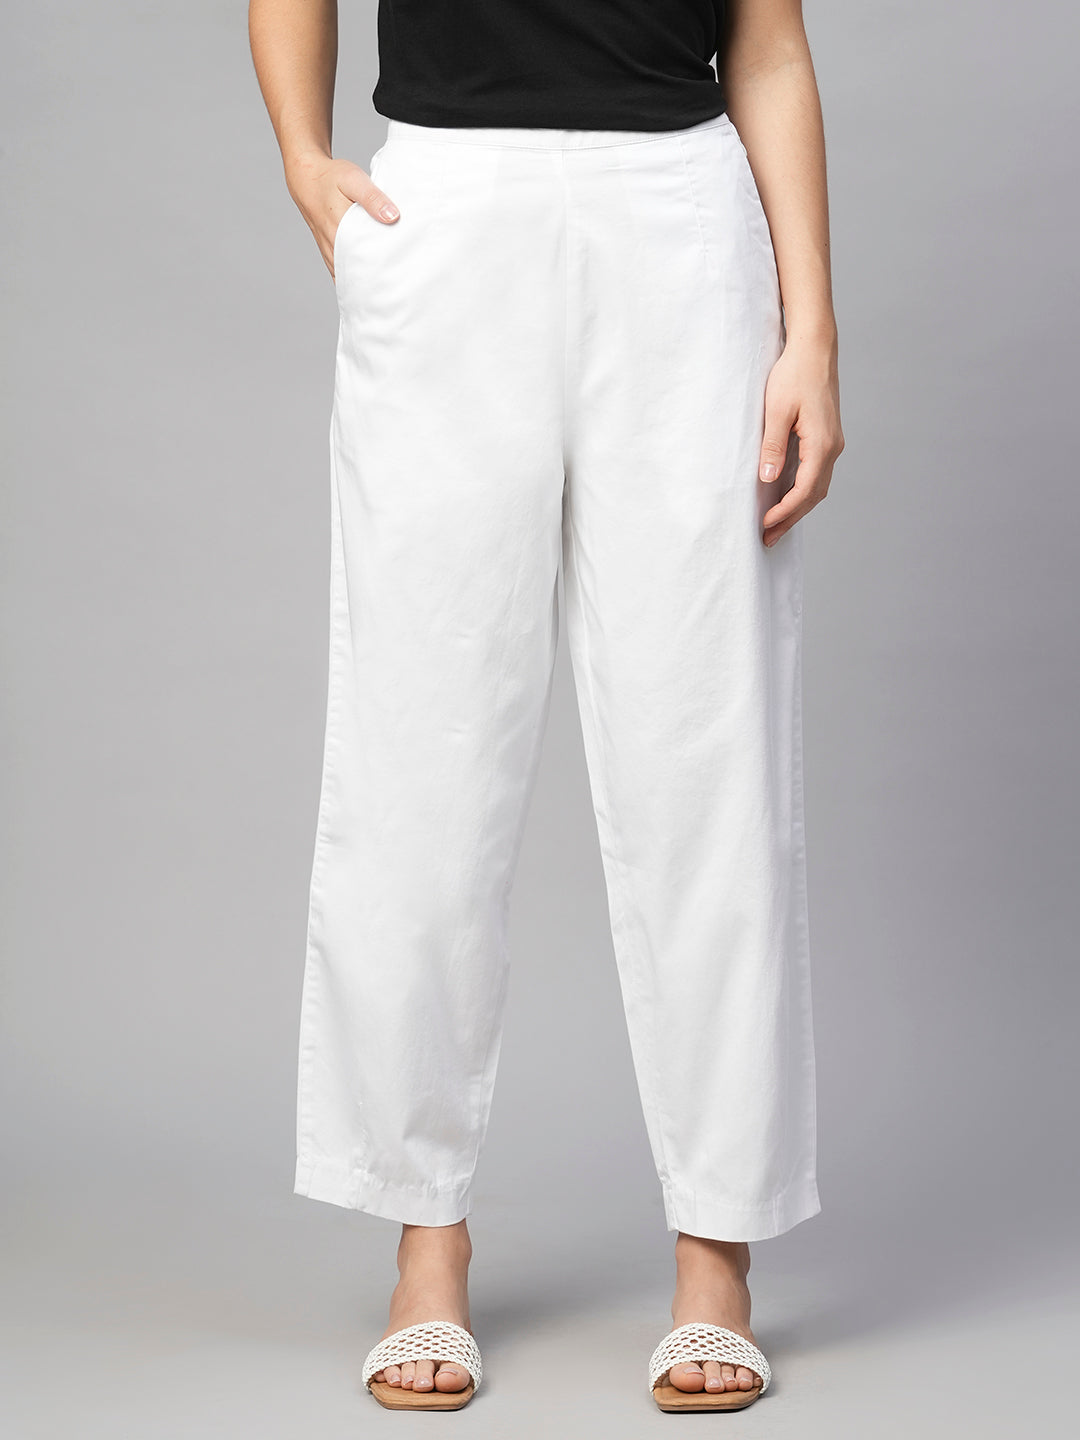 Women's White Cotton Elastane Regular Fit Pant